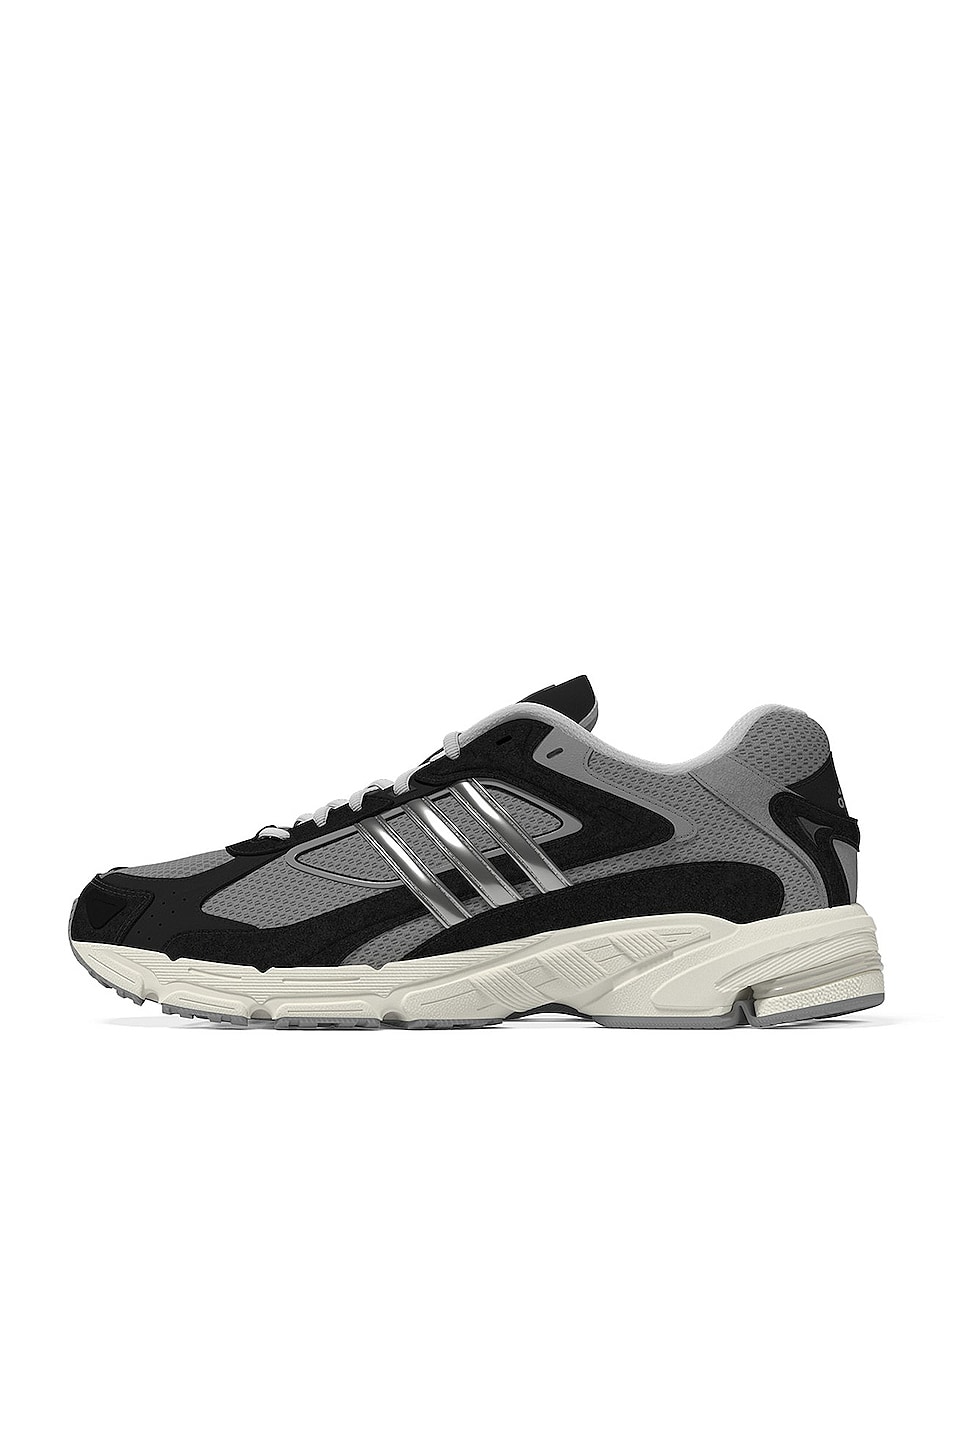 Adidas Originals Response Cl Sneakers In Gray